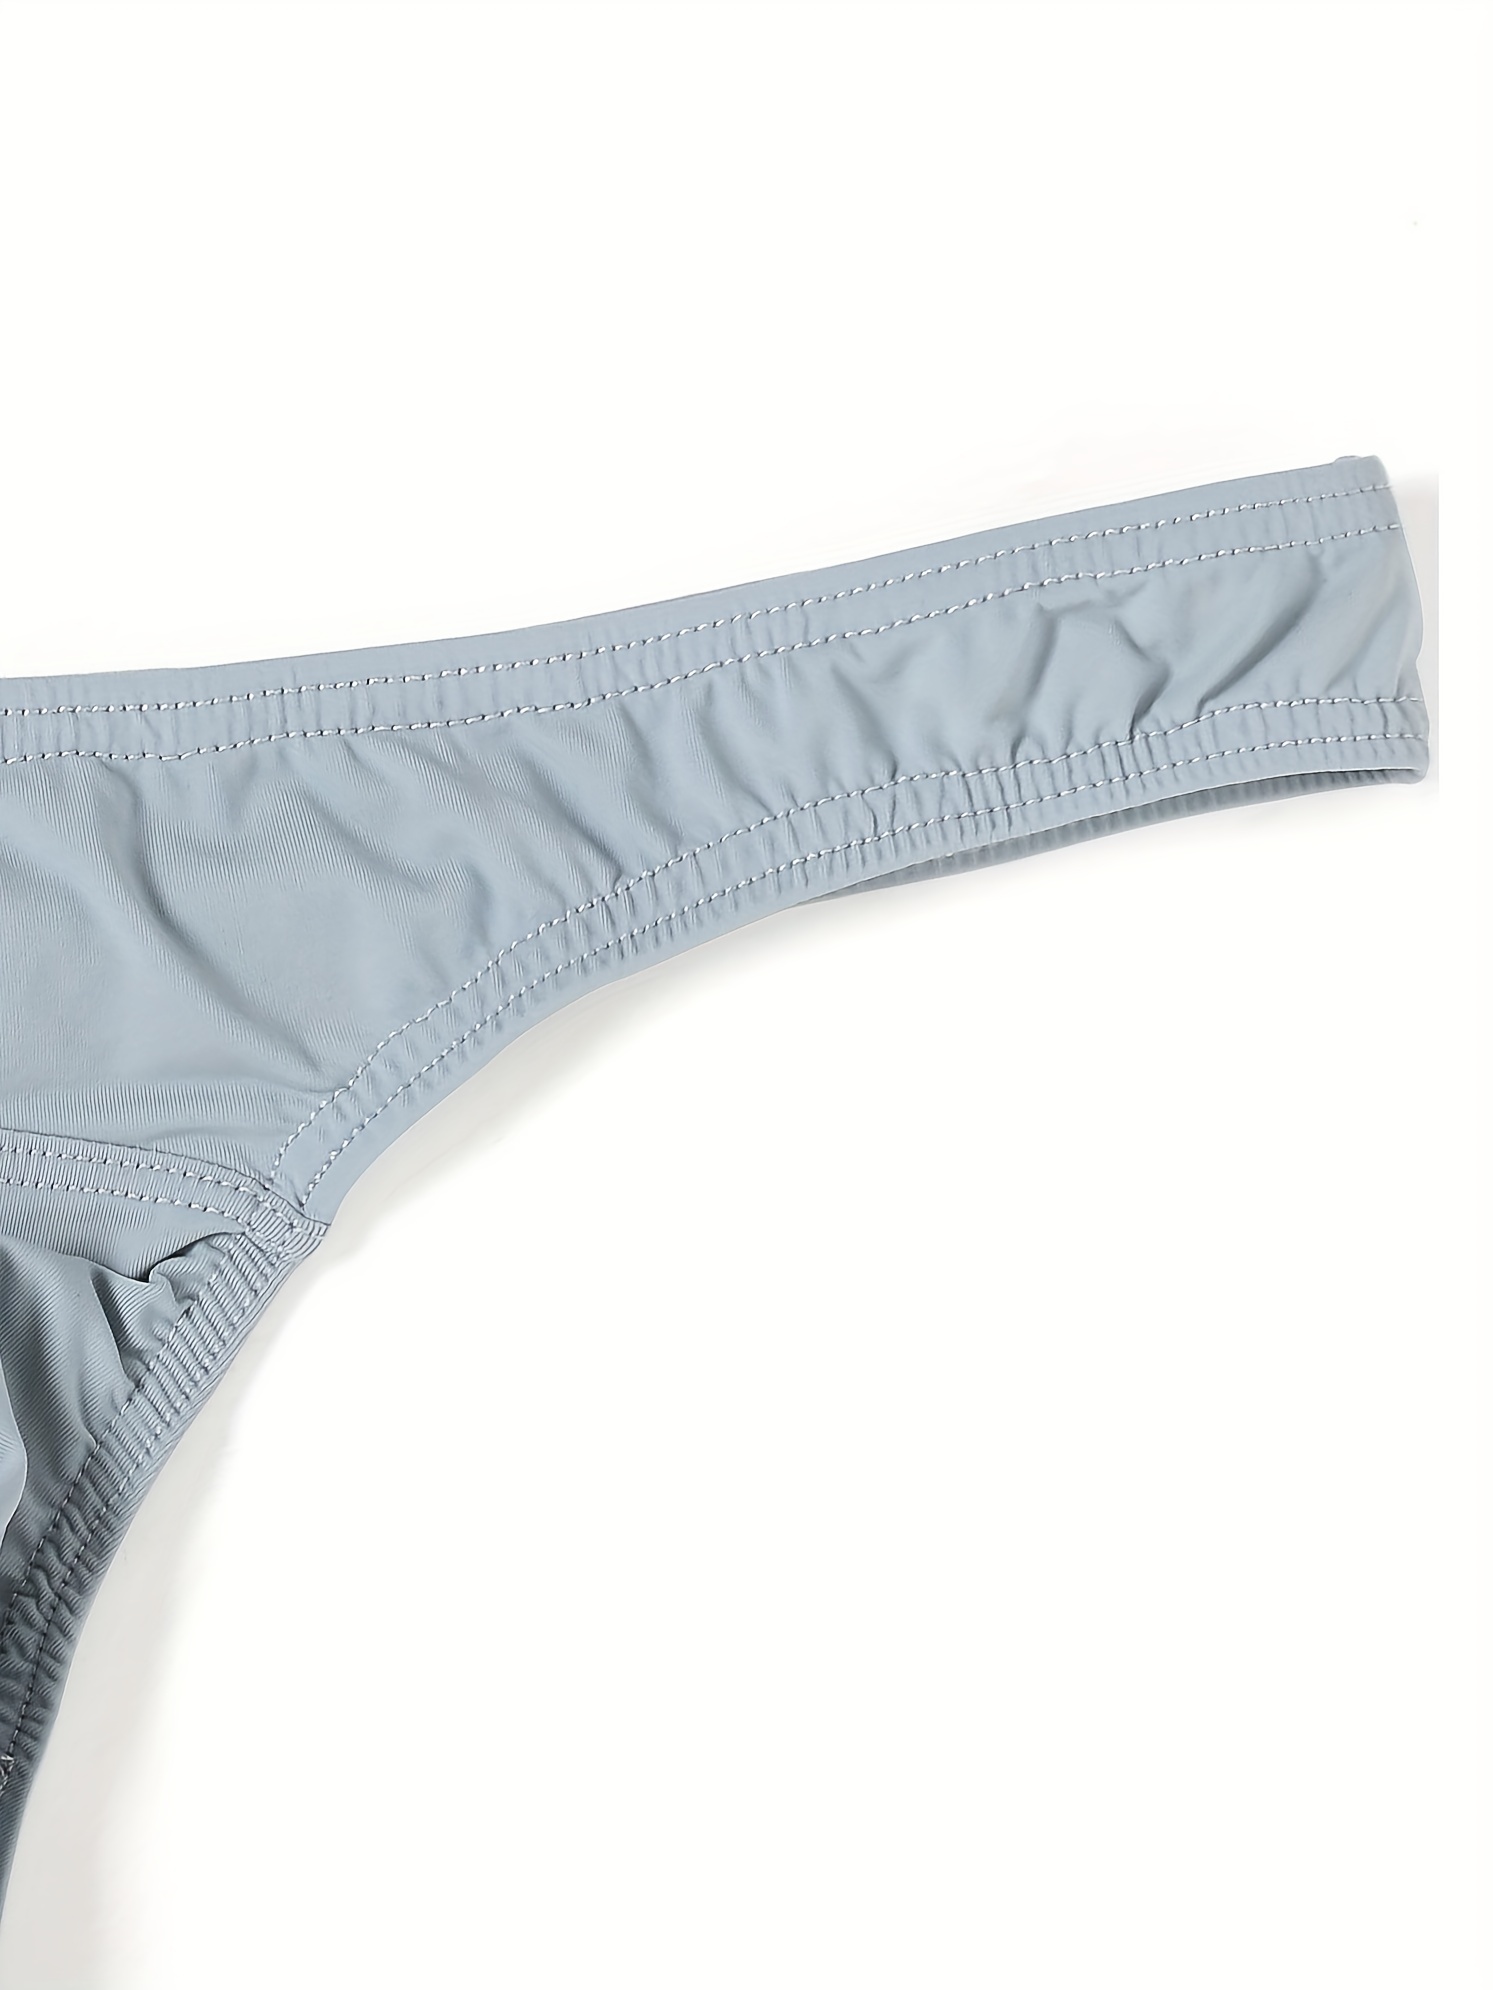  EGDE Safety 1st Super Low Rise Bikini Briefs XL Mens Underwear  : Clothing, Shoes & Jewelry